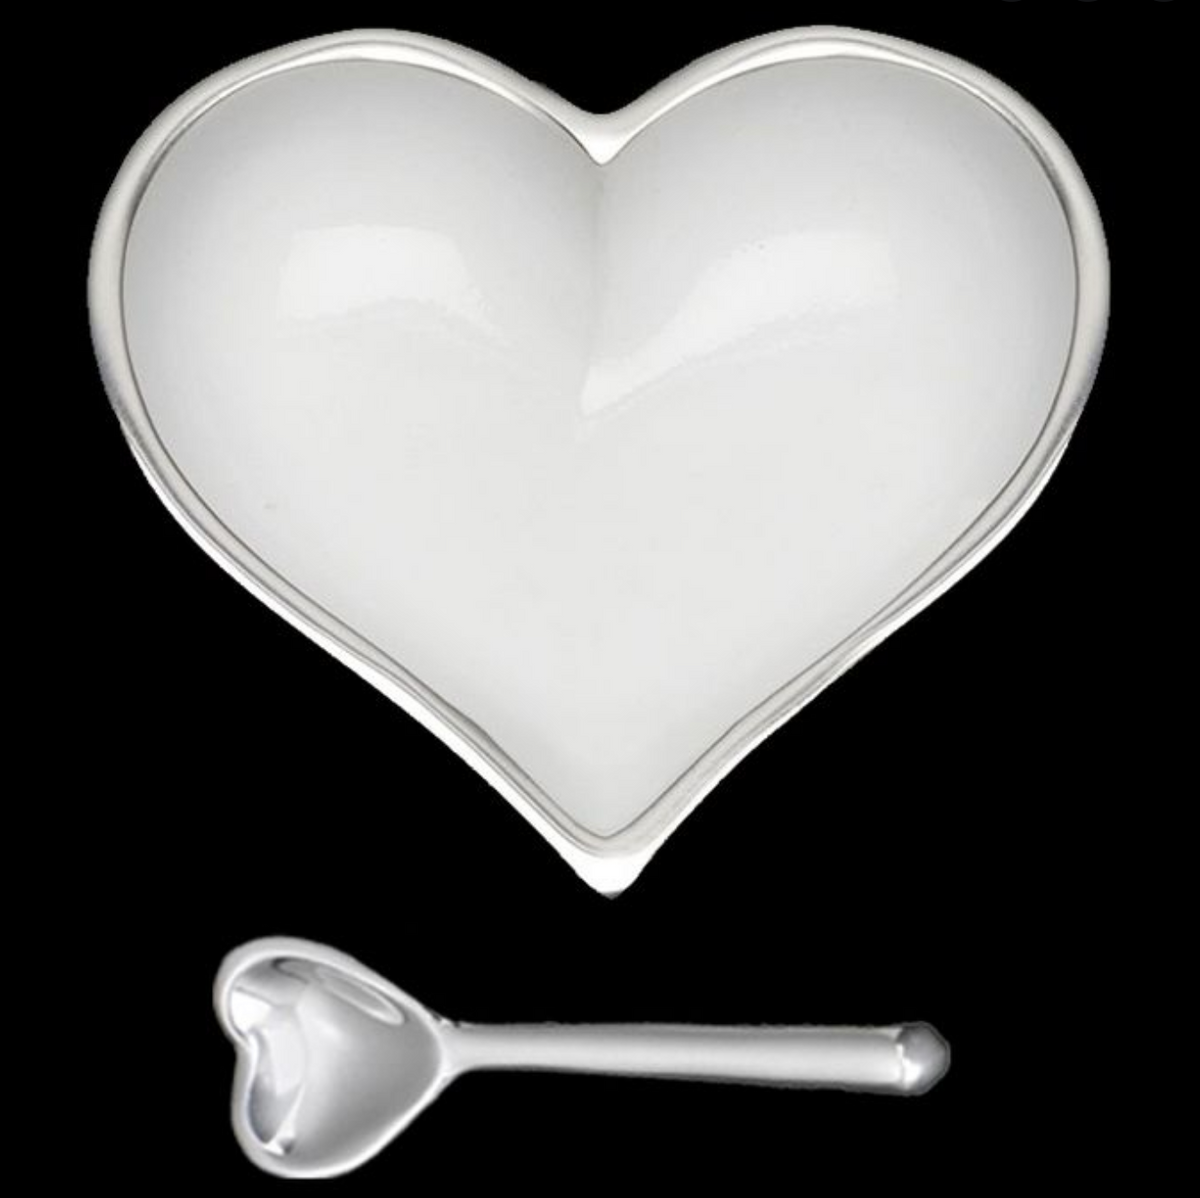 Happy Heart Snack Bowl & Spoon